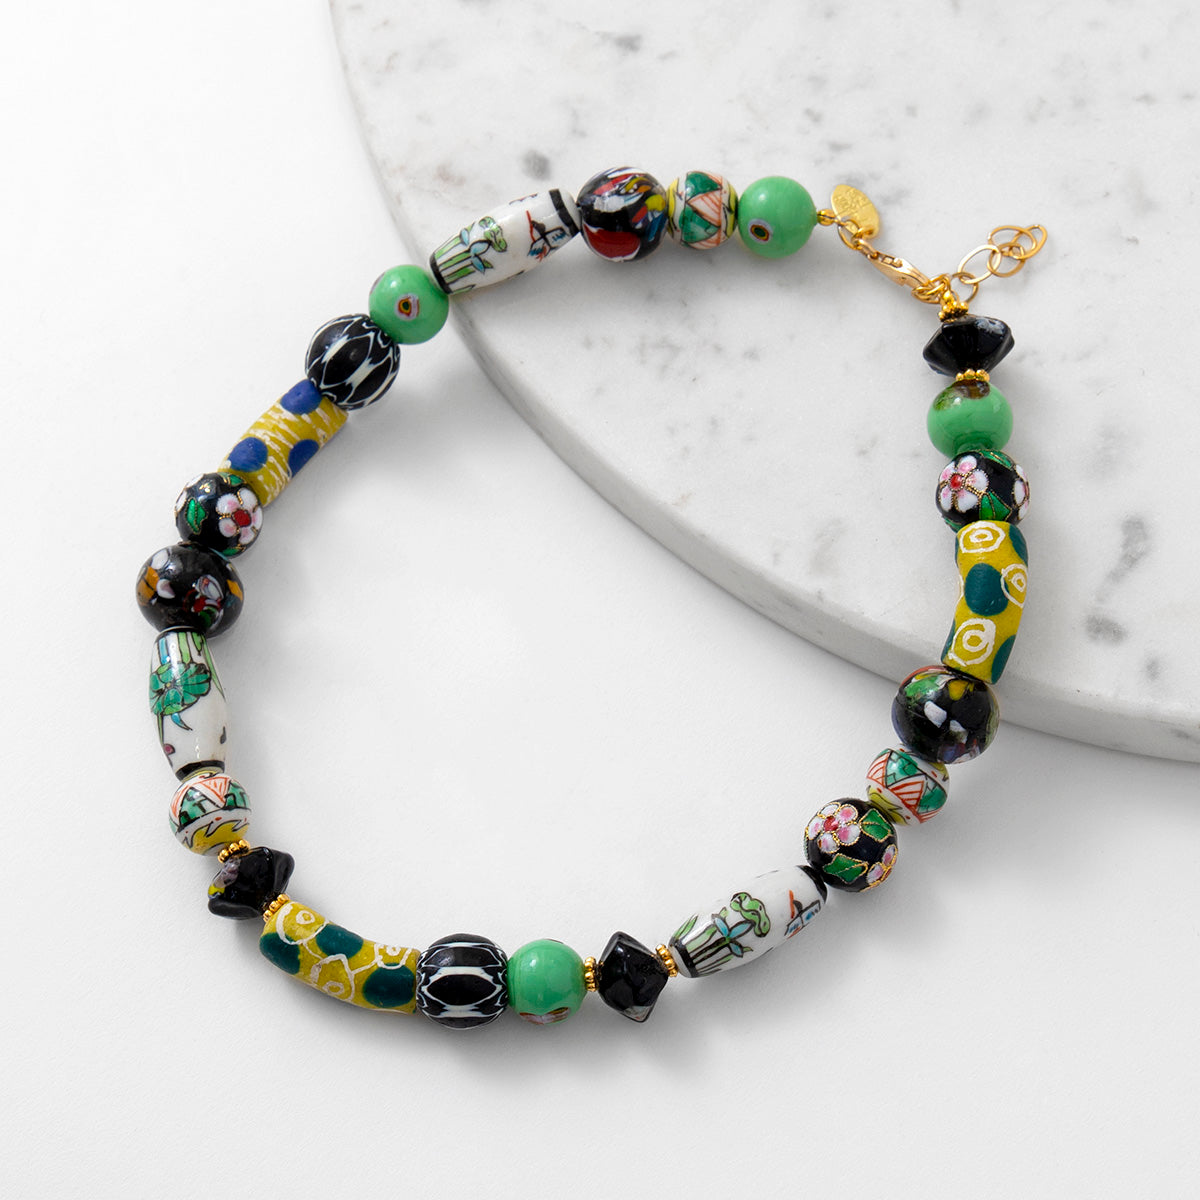 Katerina Psoma Black Short Necklace trade beads